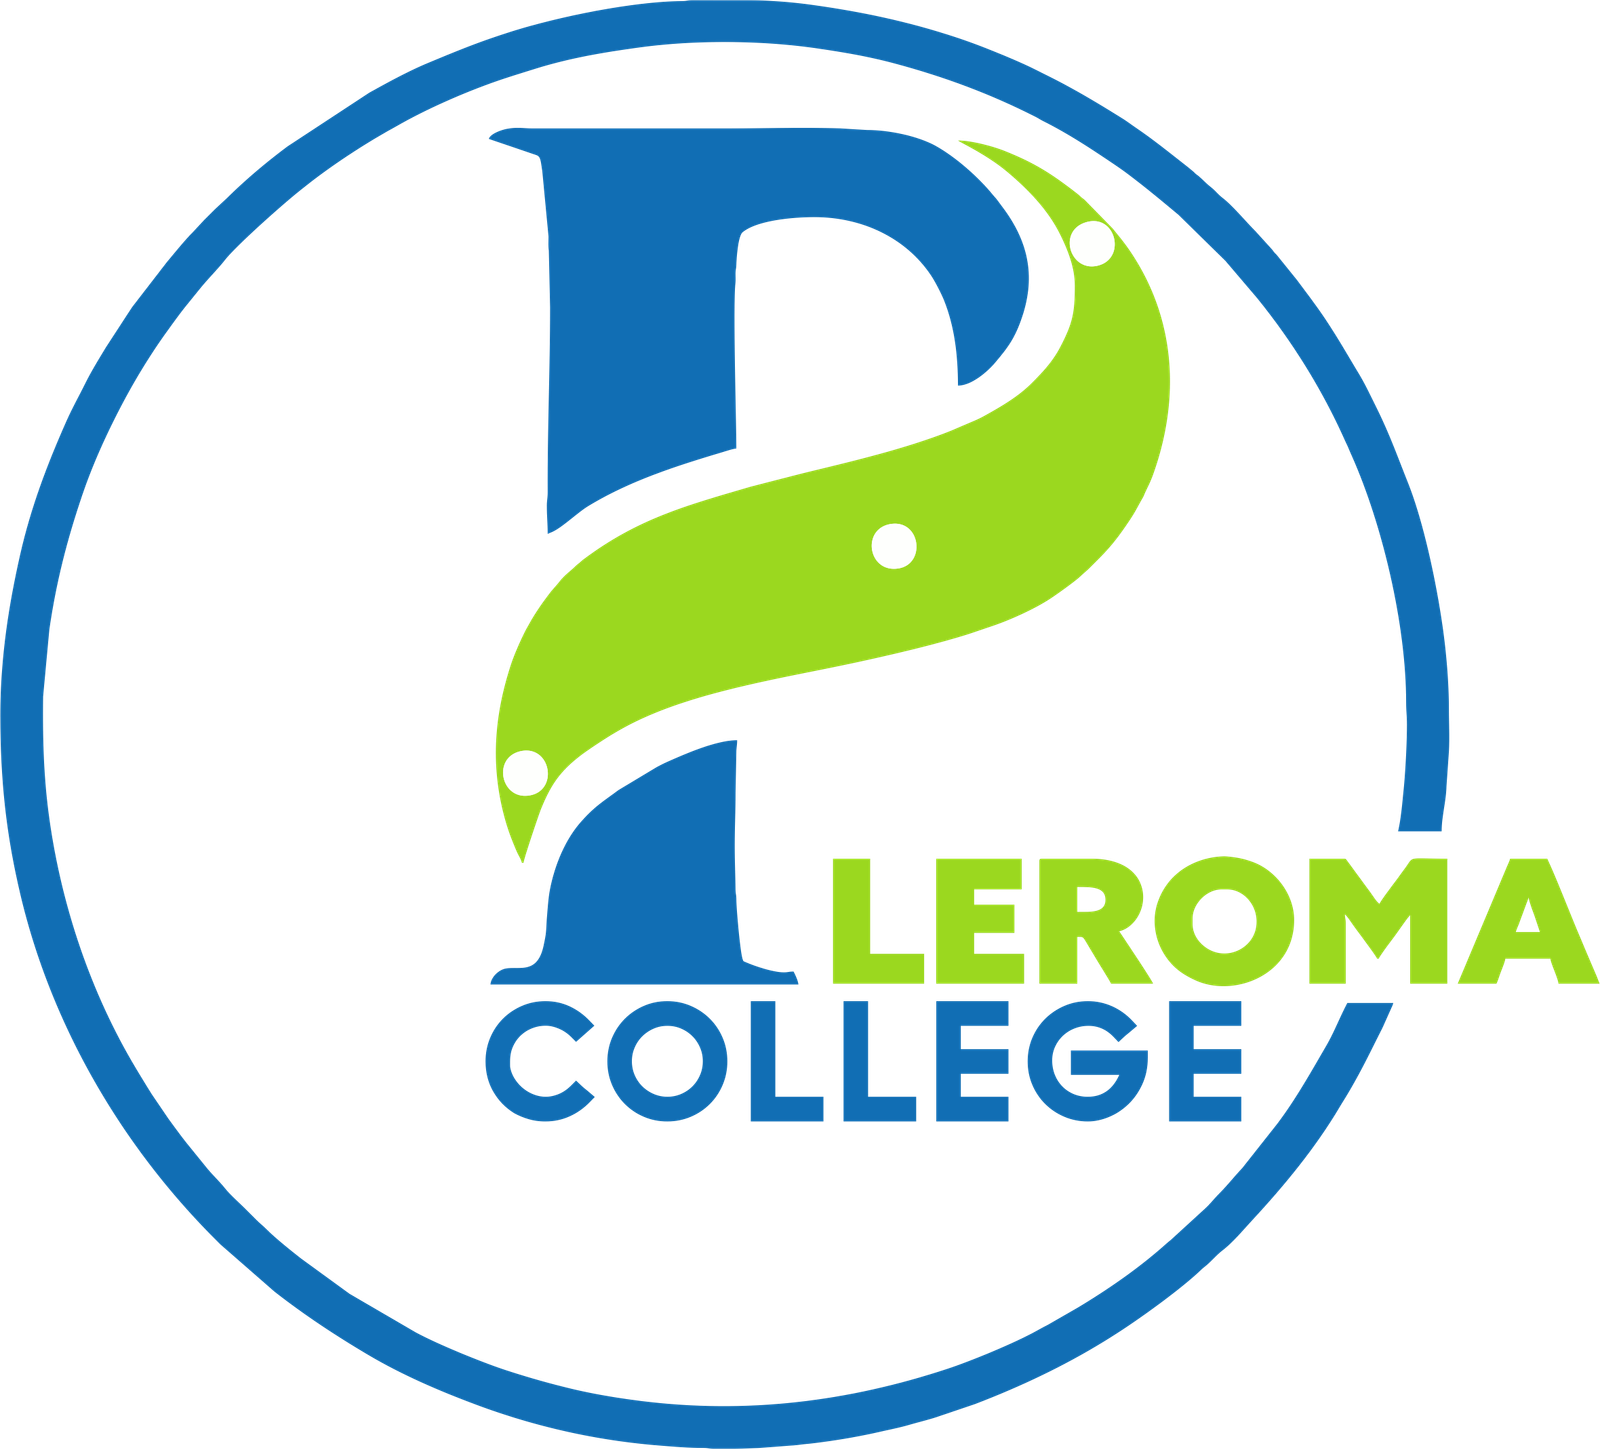 Pleroma College